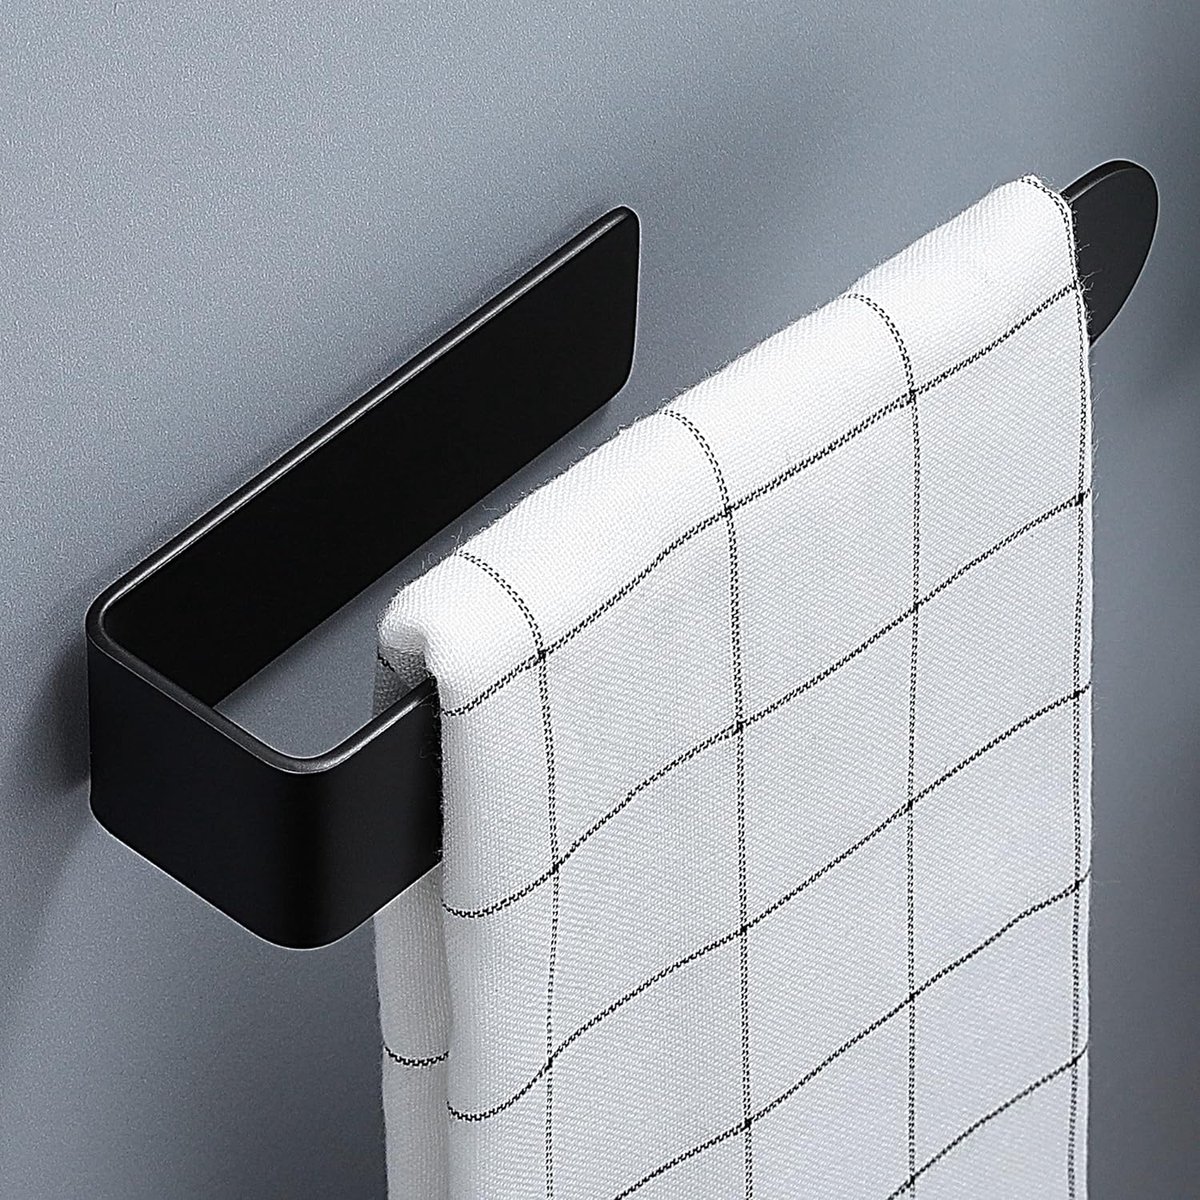 Towel Rail No Drilling Black - 20 cm Towel Rail Self-Adhesive Bath Towel Holder for Bathroom Kitchen SUS 304 Stainless Steel